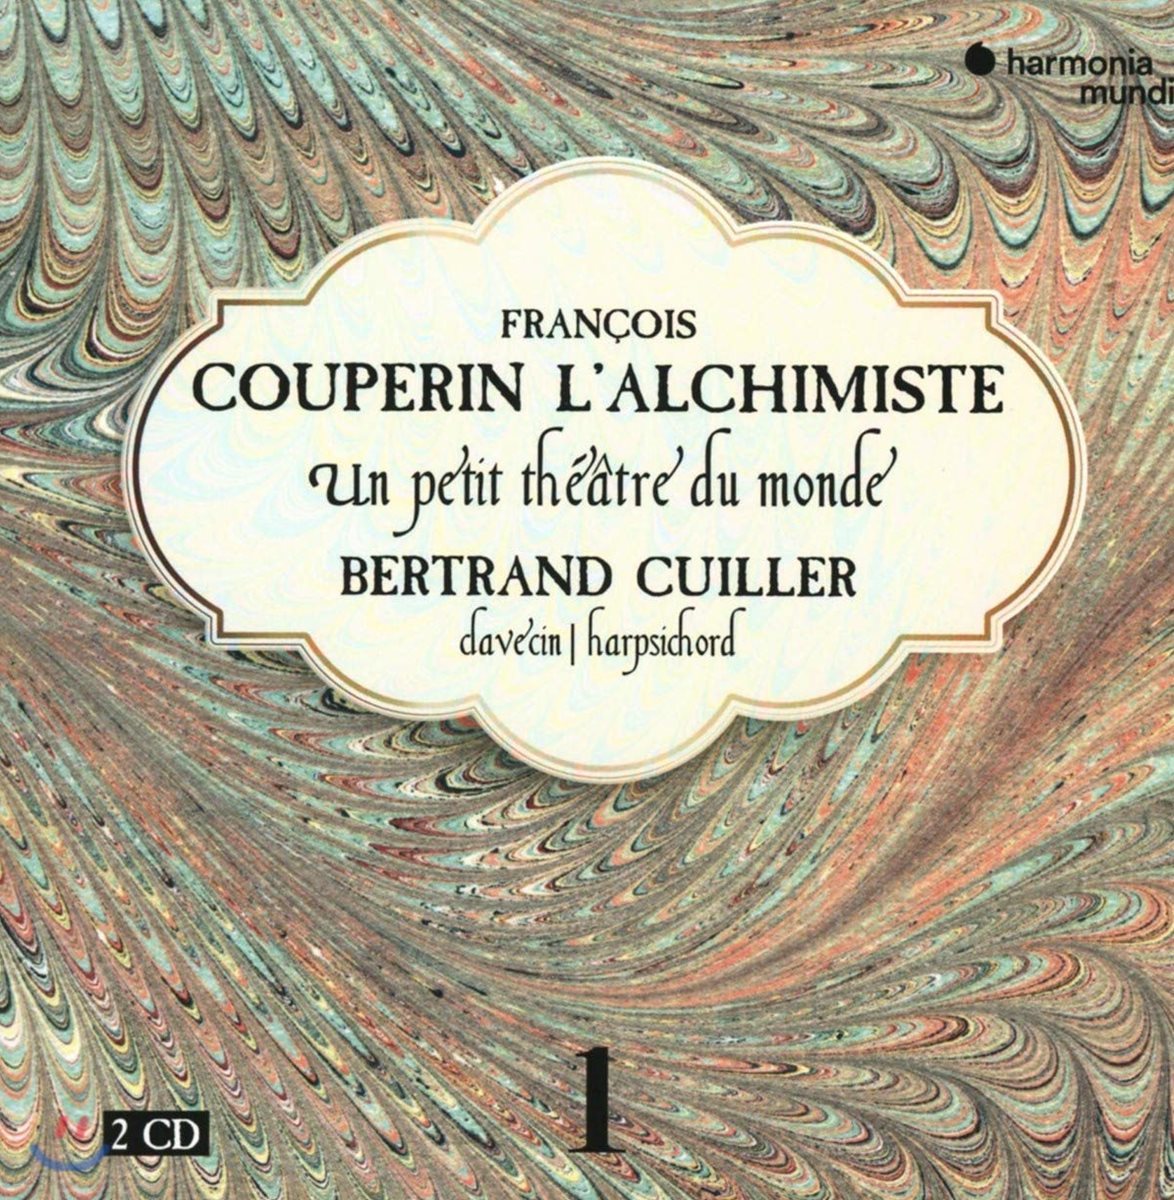 Bertrand Cuiller 프랑수아 쿠프랭: 쳄발로 작품집 1집 &#39;연금술사 쿠프랭&#39; (Couperin: &#39;L&#39;Alchimiste&#39; - Complete works for harpsichord) 베르트랑 큐이에